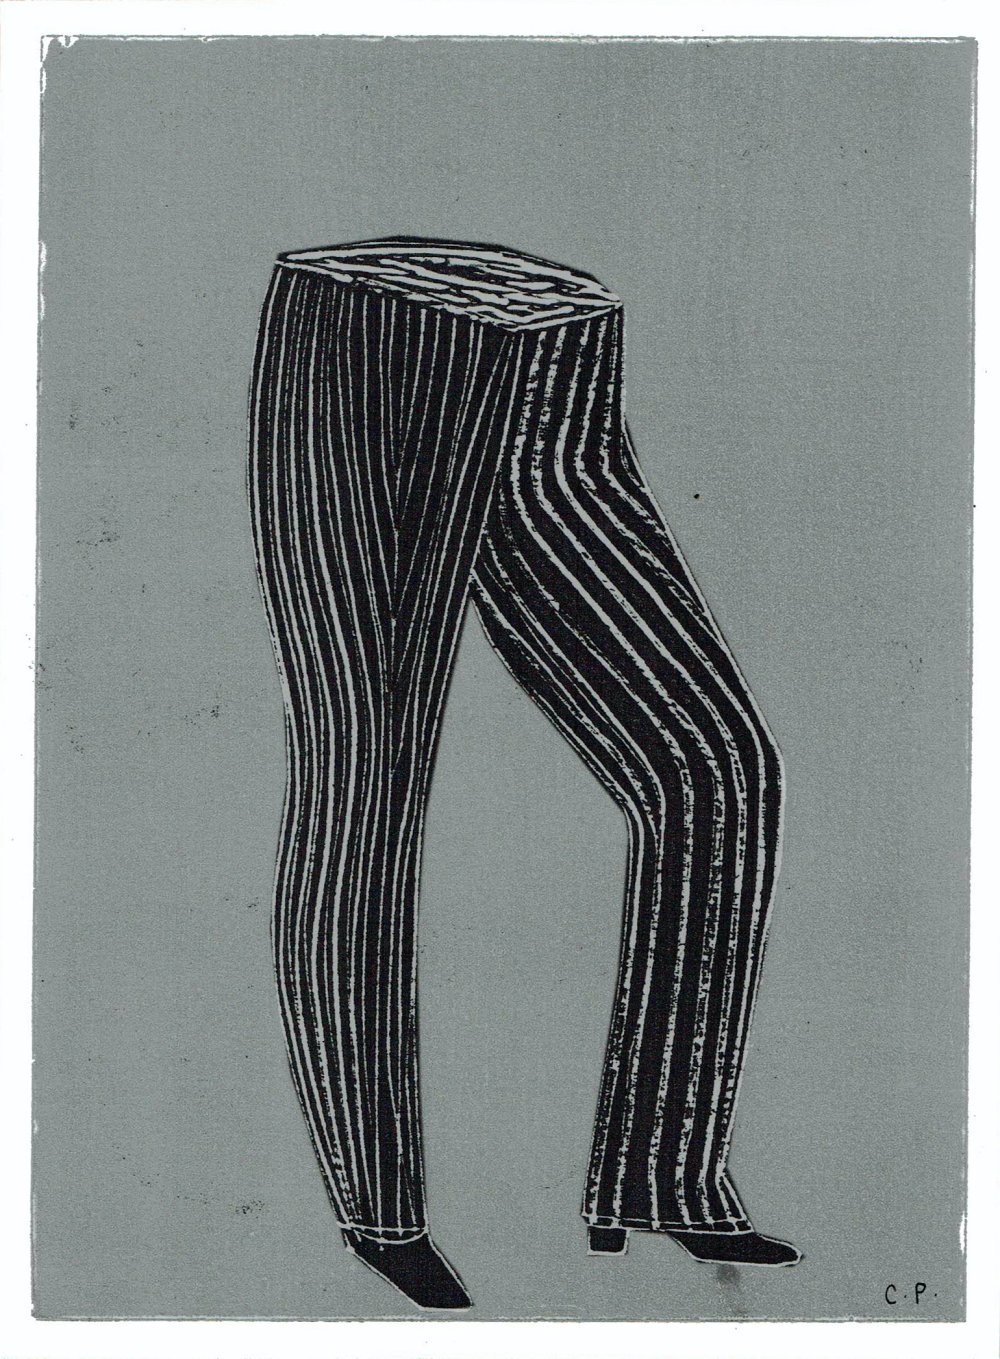 Cathie Pilkington, Legs, 2020